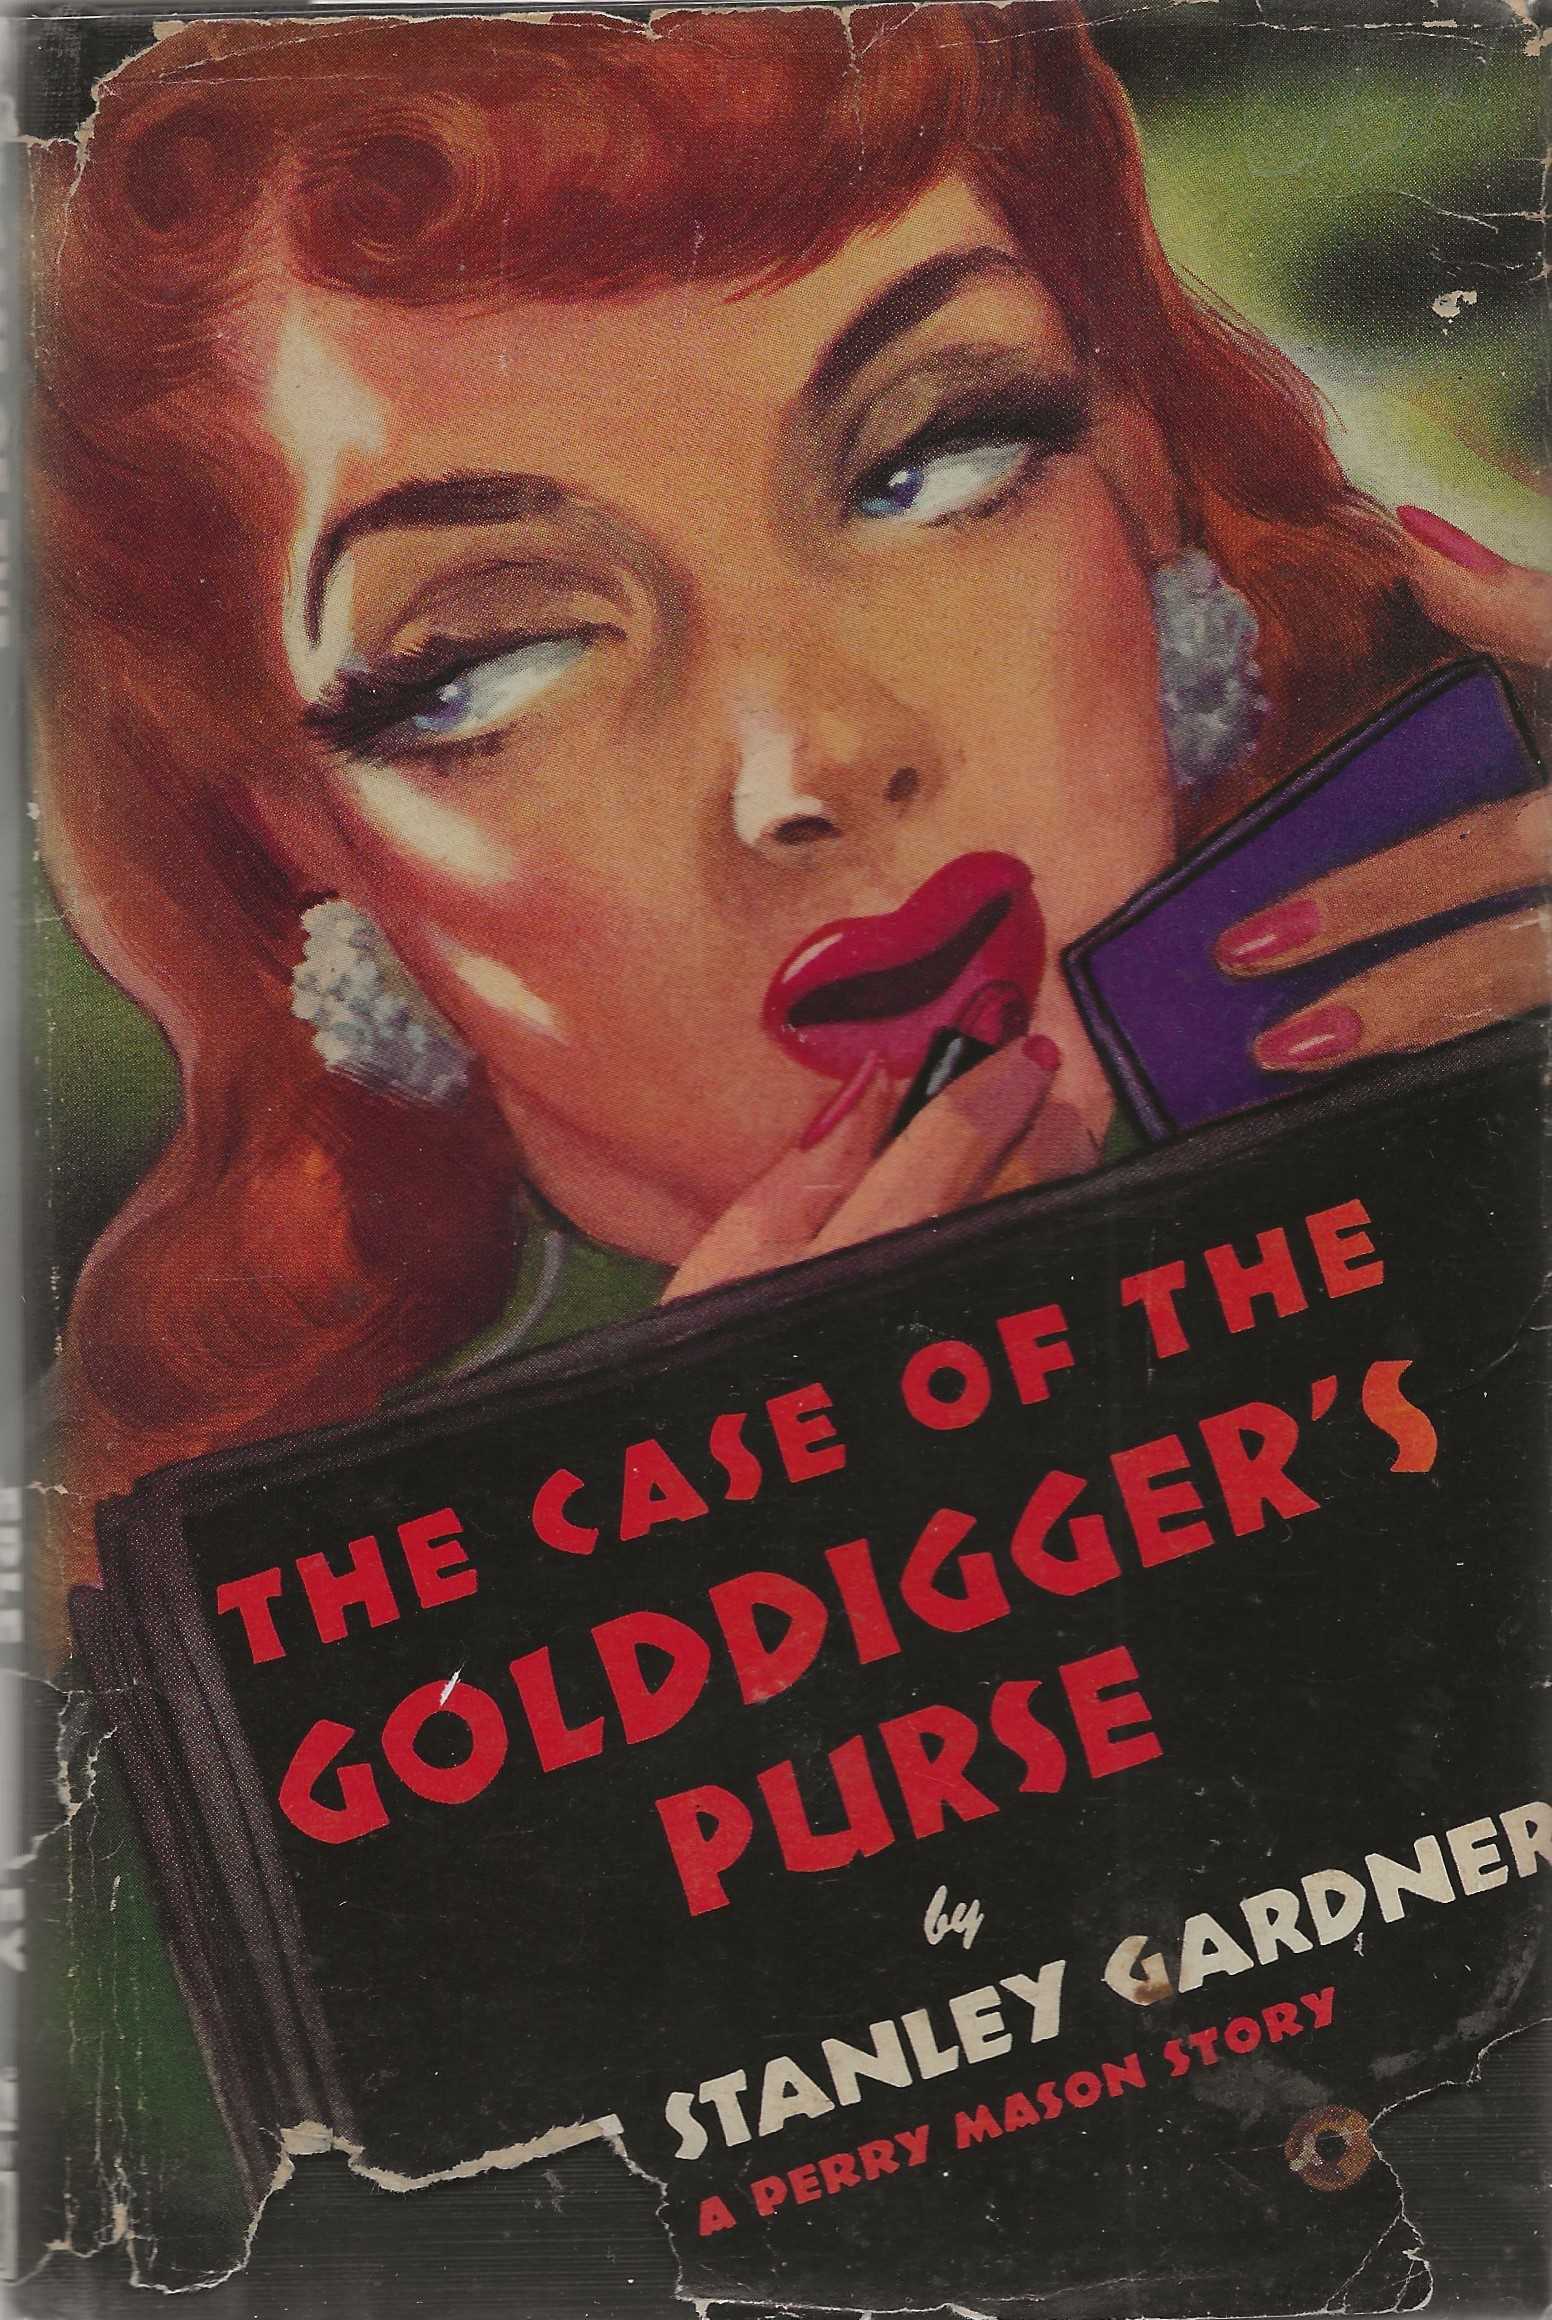 The Case of the Golddigger's Purse, Erle Stanley Gardner